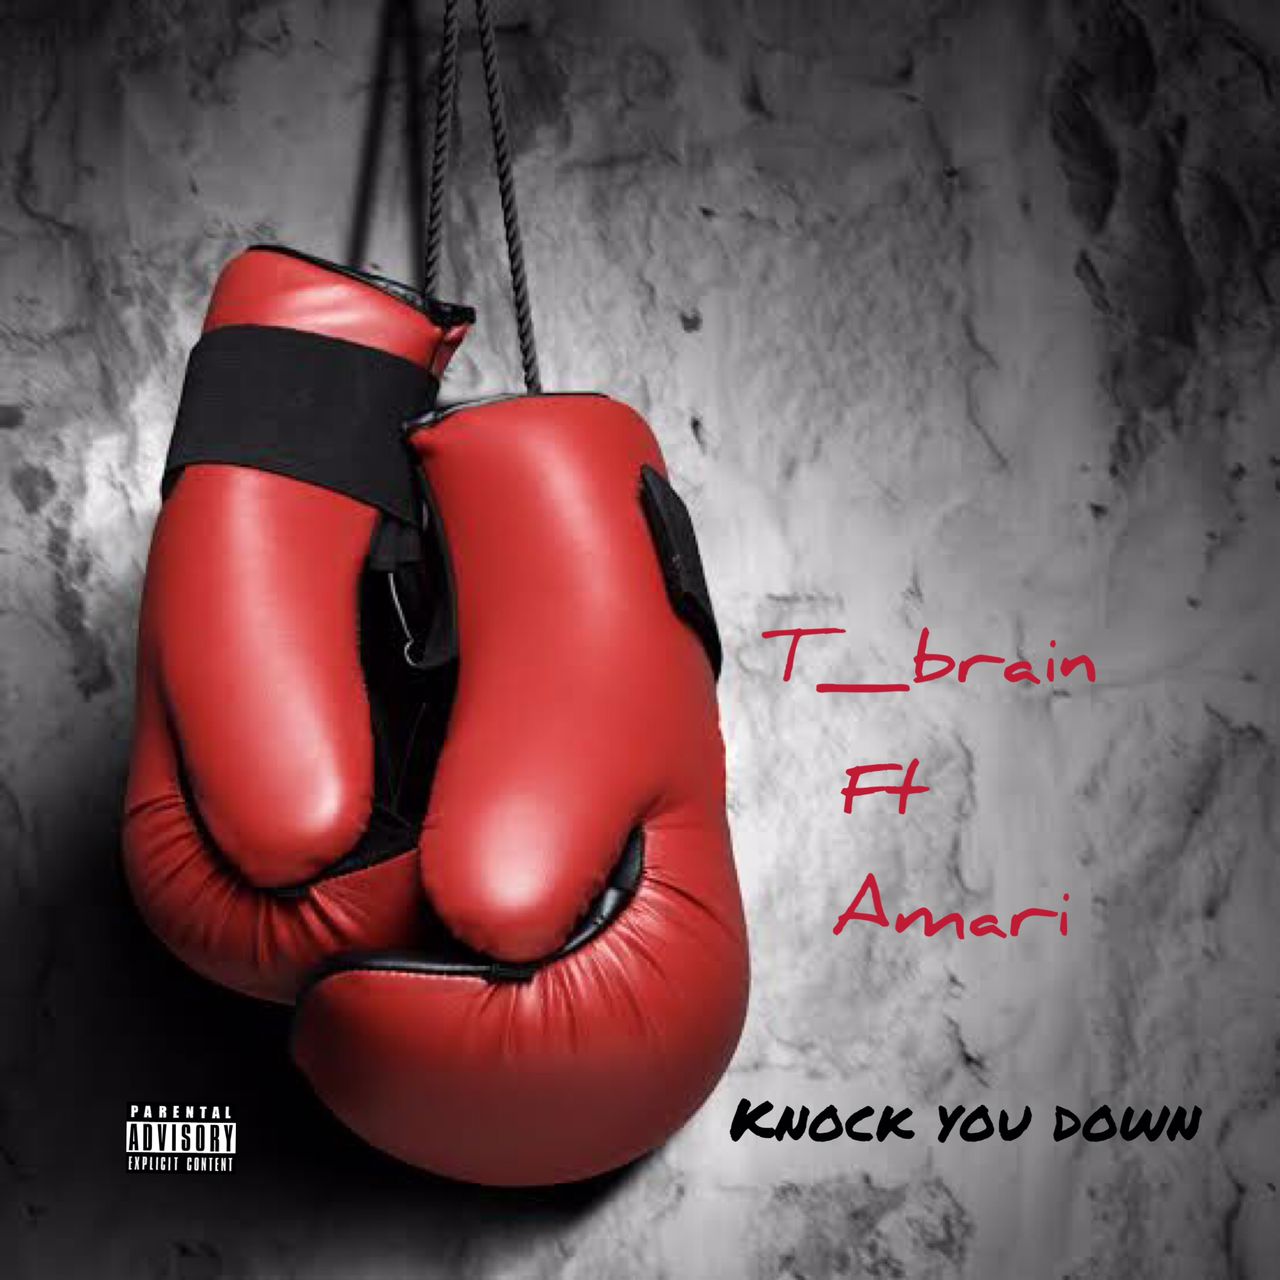 T_brain ft. Amari – Knock You Down